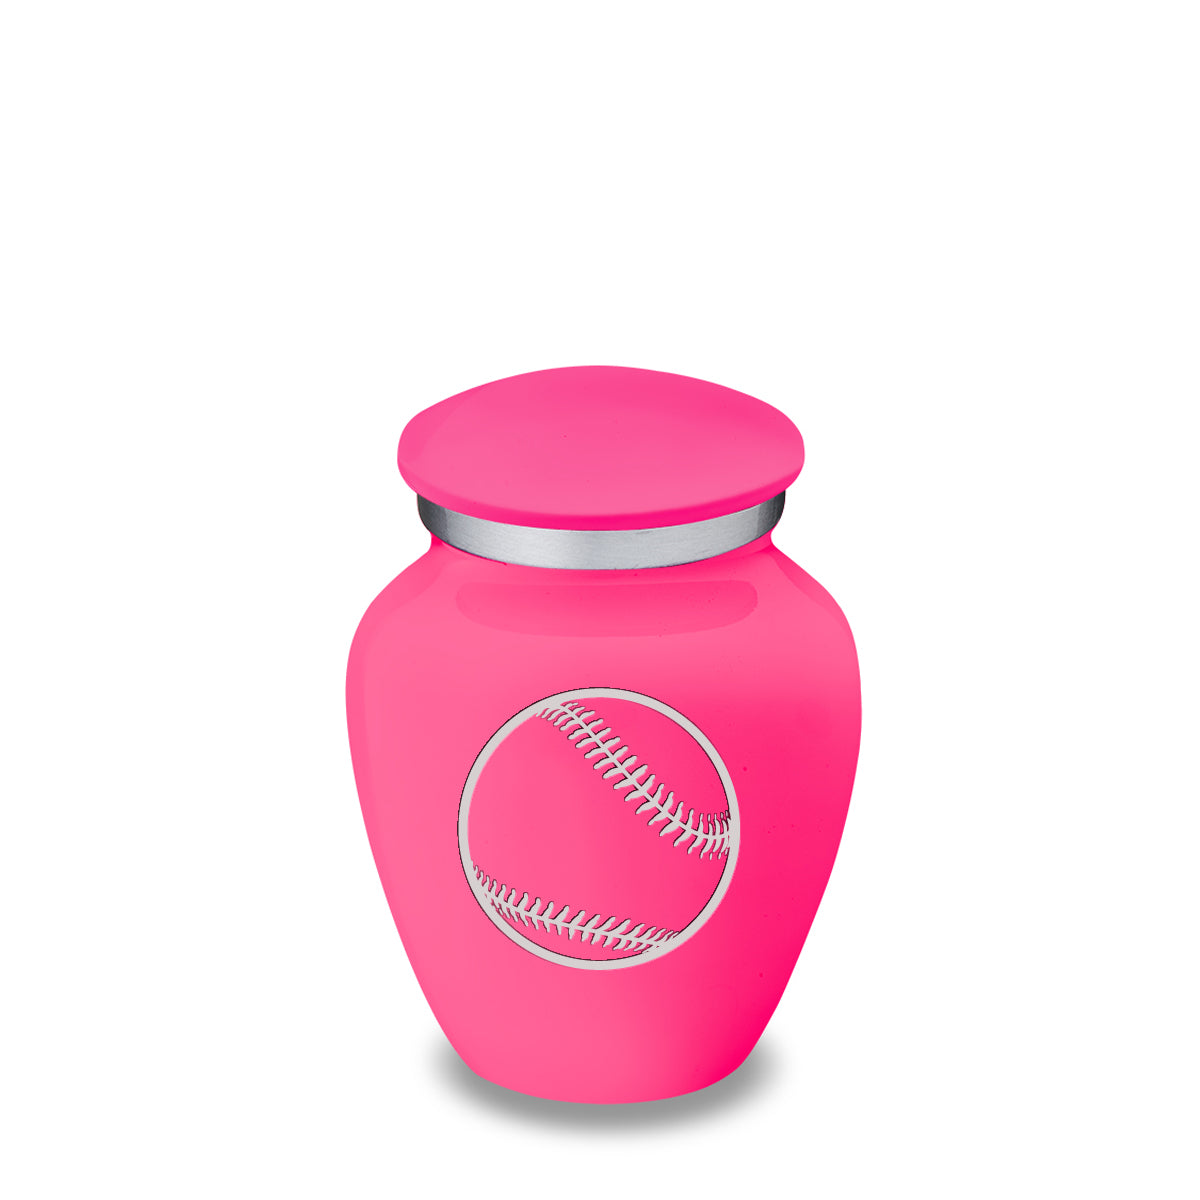 Keepsake Embrace Bright Pink Baseball Cremation Urn